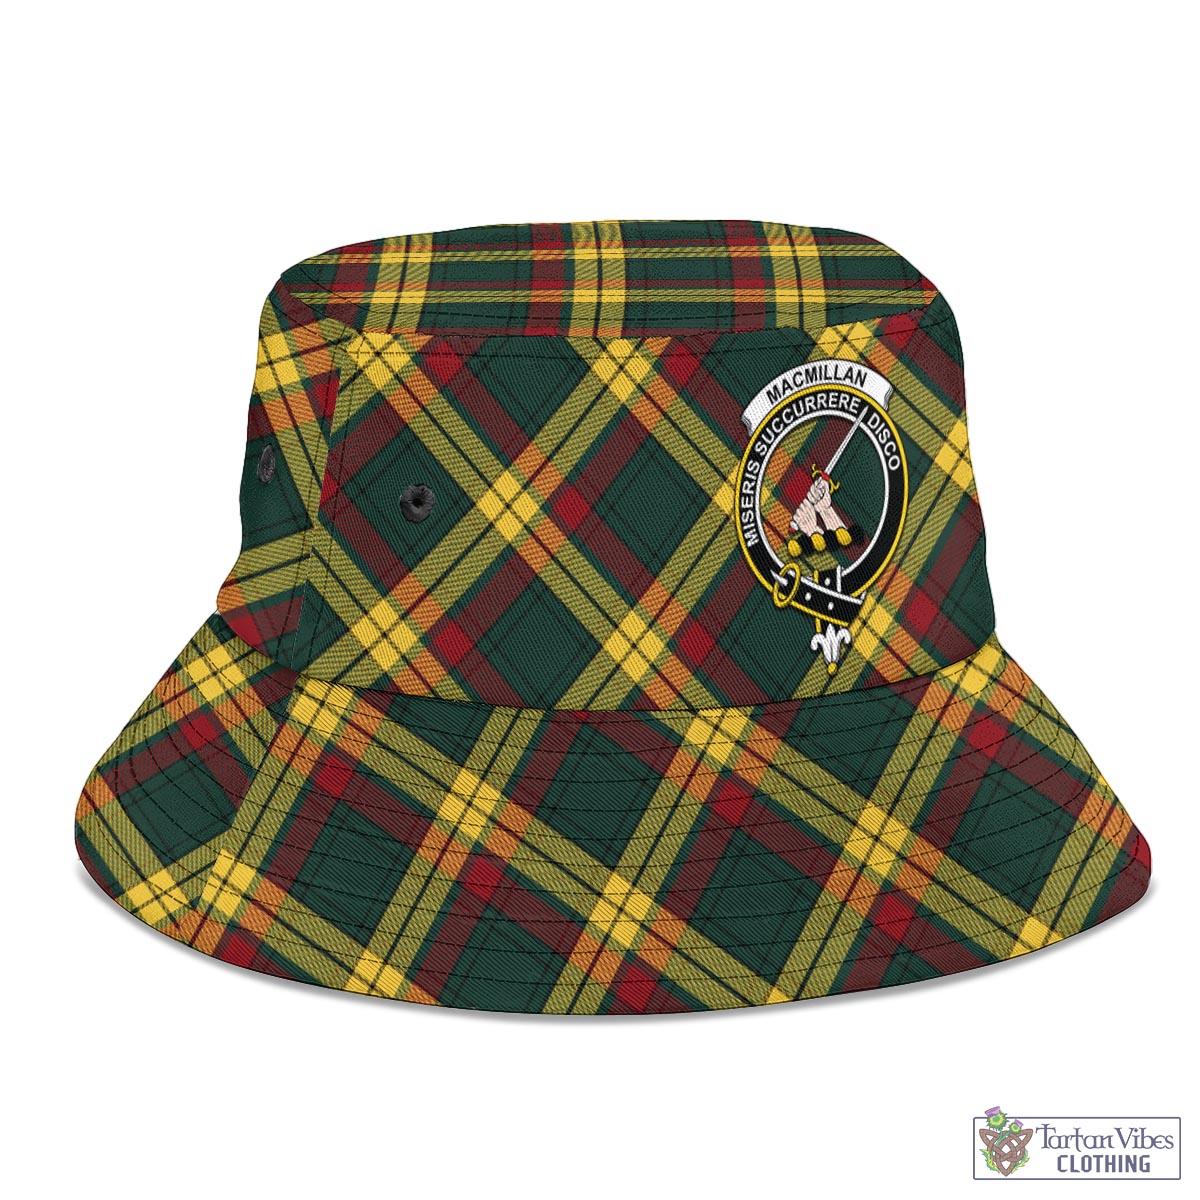 Tartan Vibes Clothing MacMillan Old Modern Tartan Bucket Hat with Family Crest